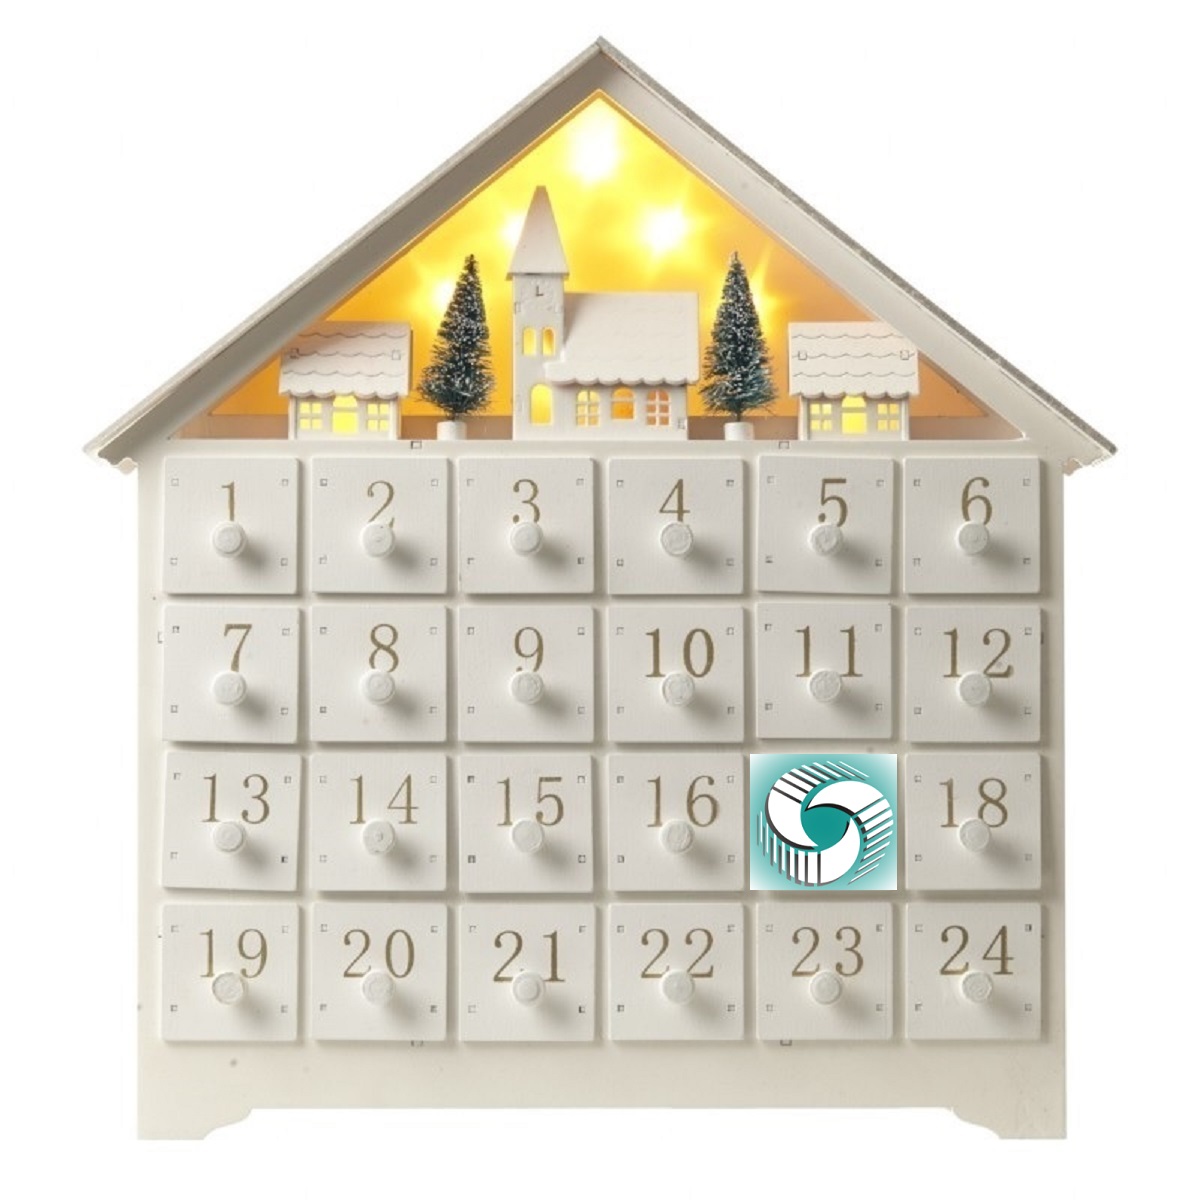 Day 17 – Frontier’s Advent Calendar